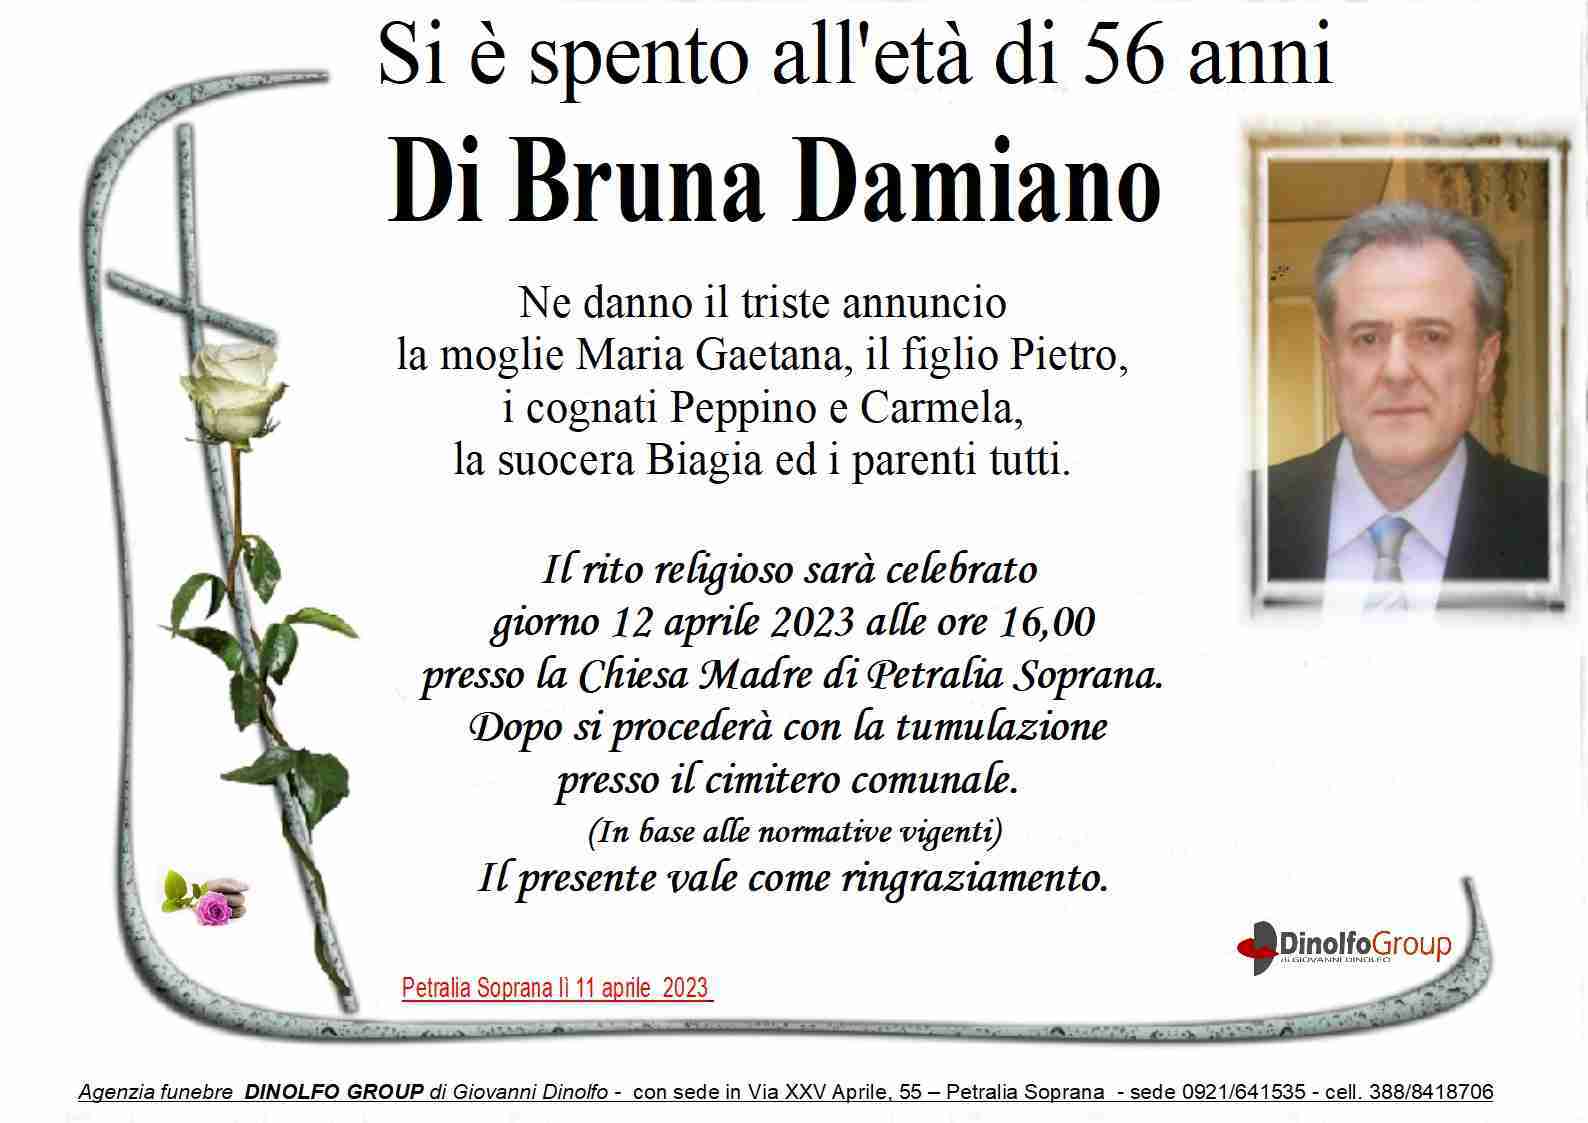 Damiano Di Bruna